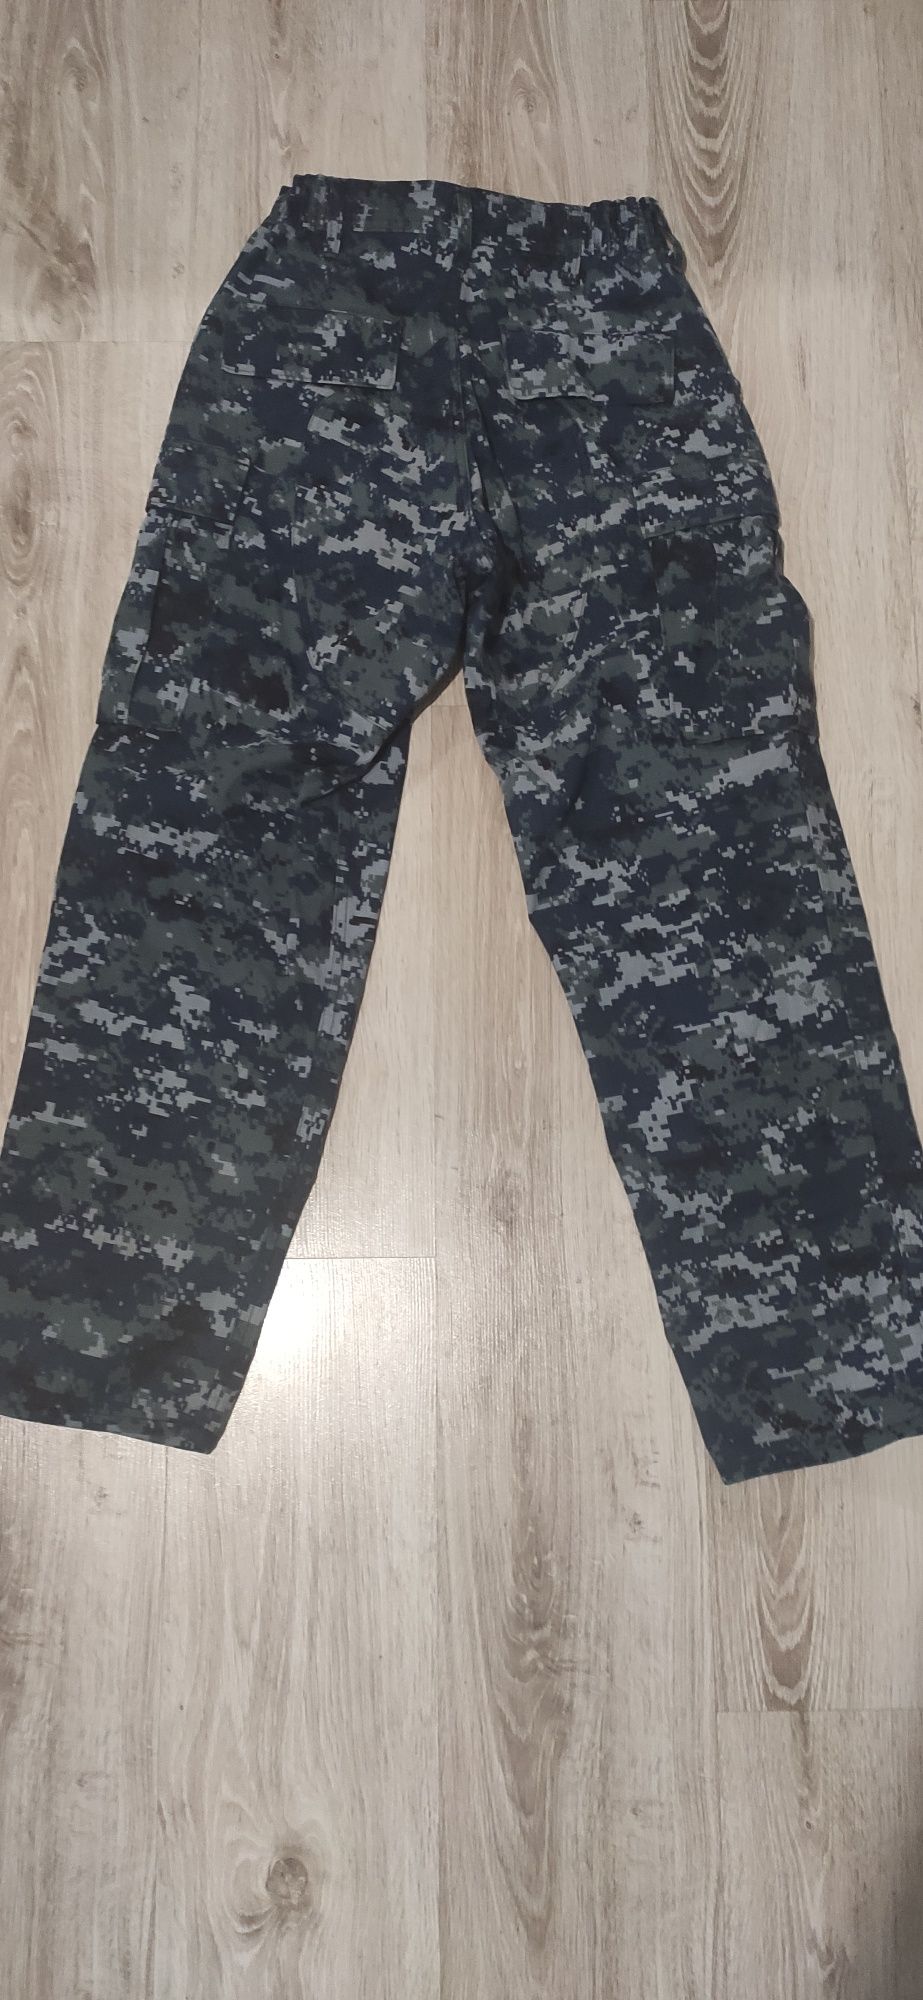 Spodnie US Navy Blueberry AOR NWU Small Regular